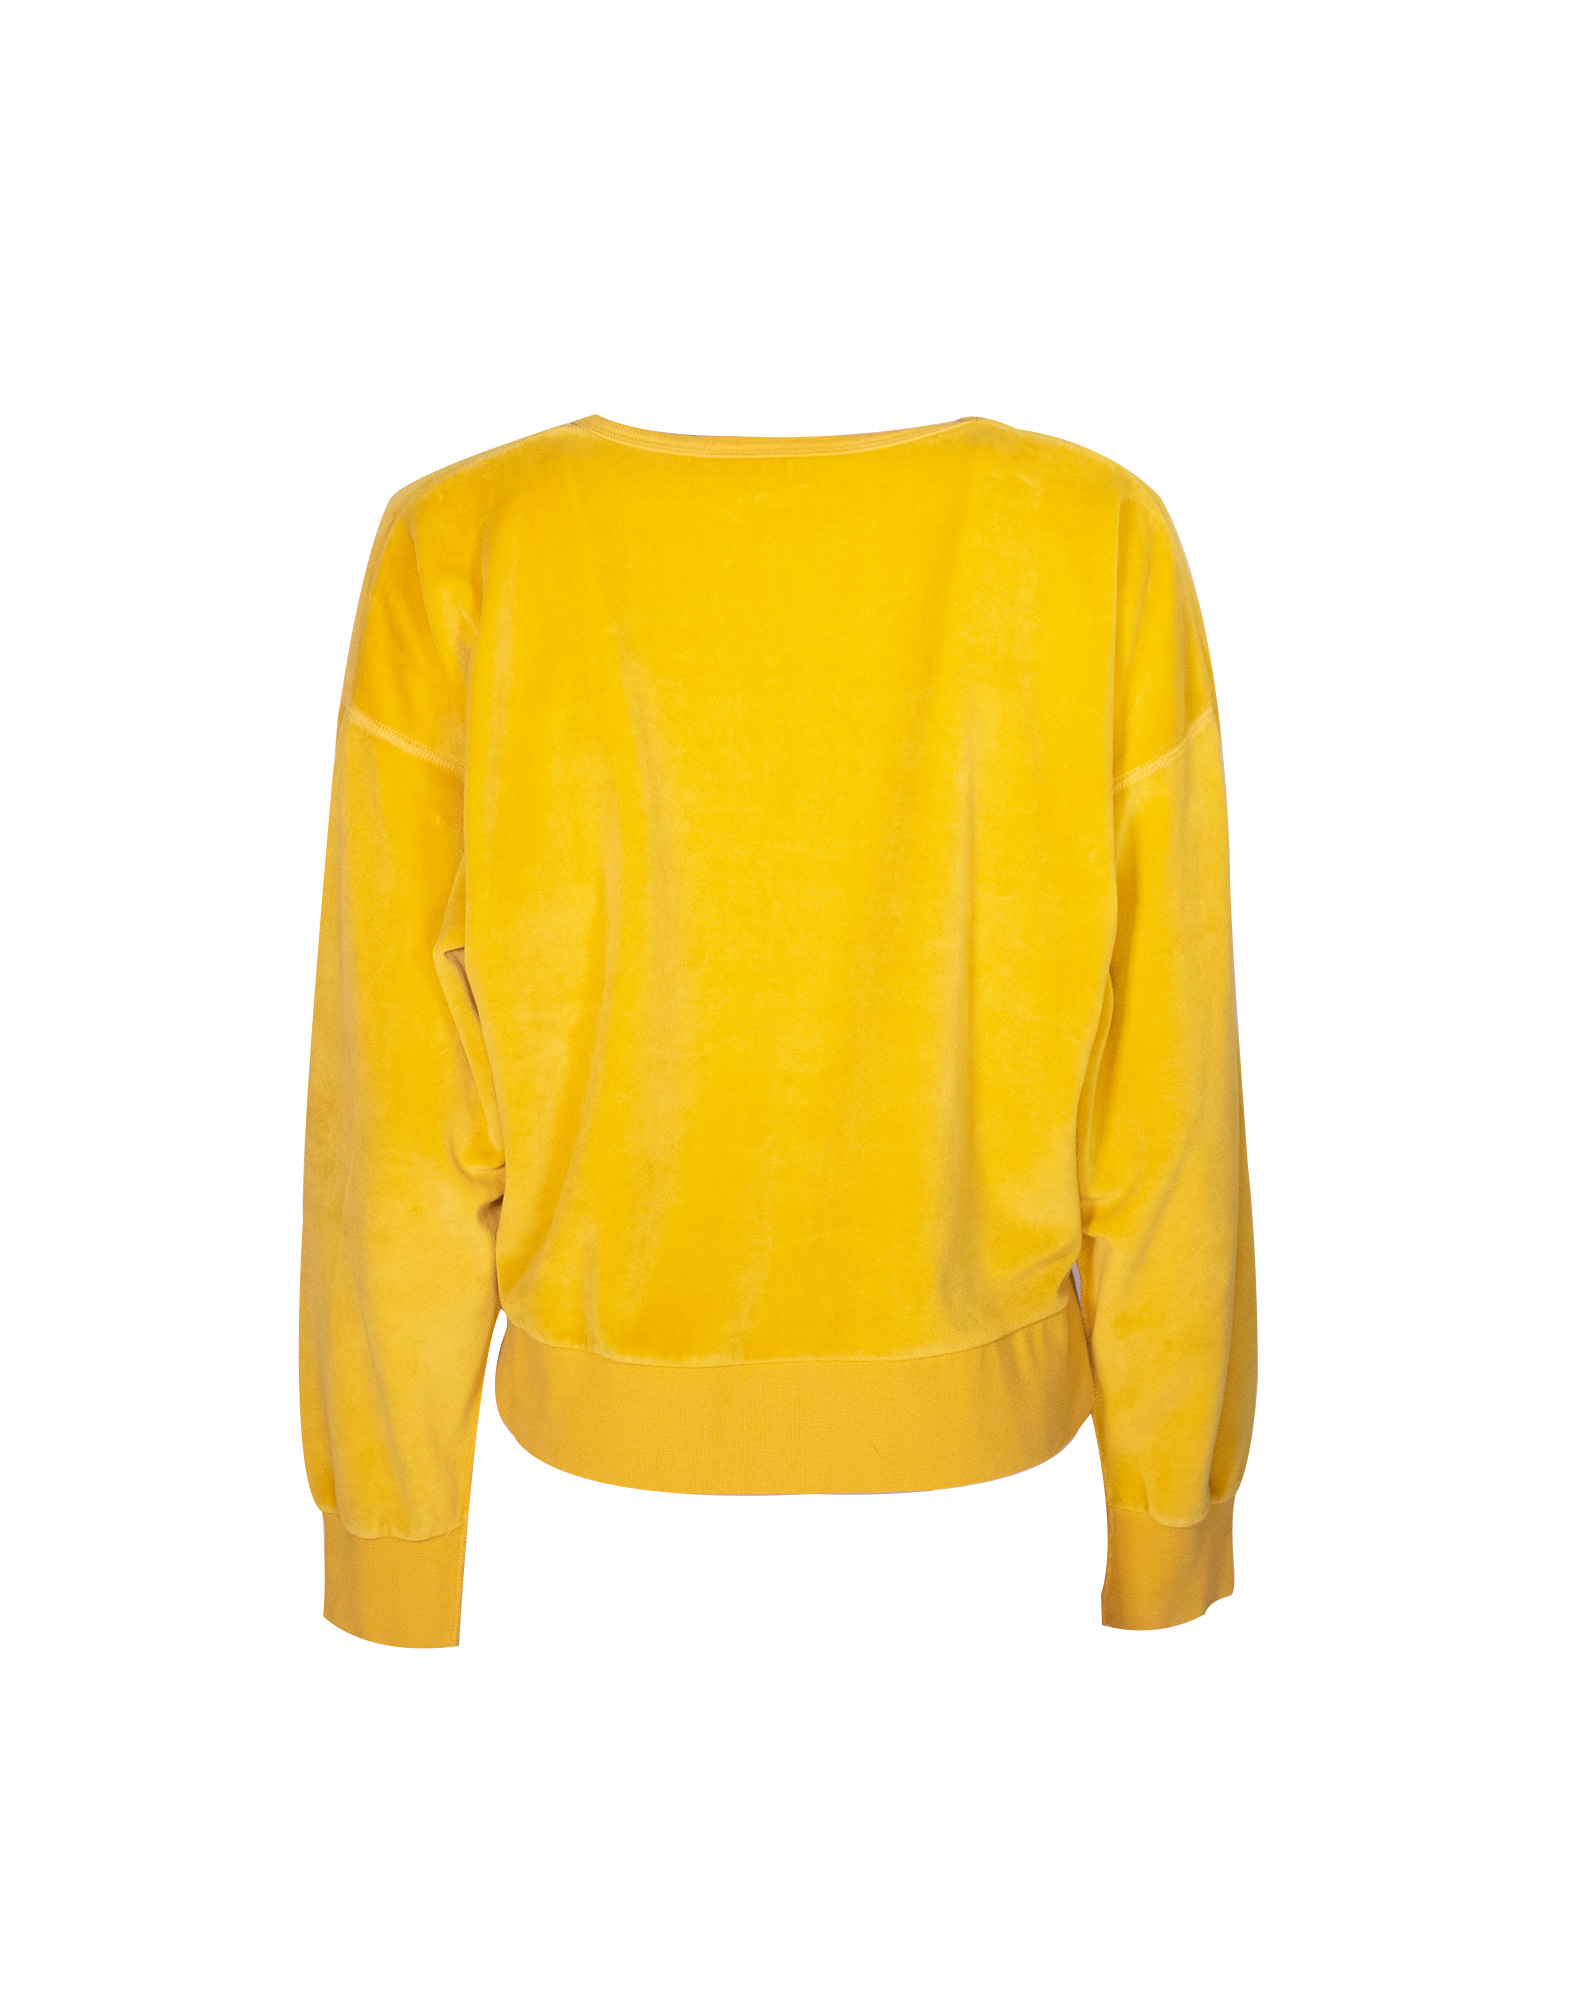 Sonia Rykiel - Yellow cotton sweatshirt